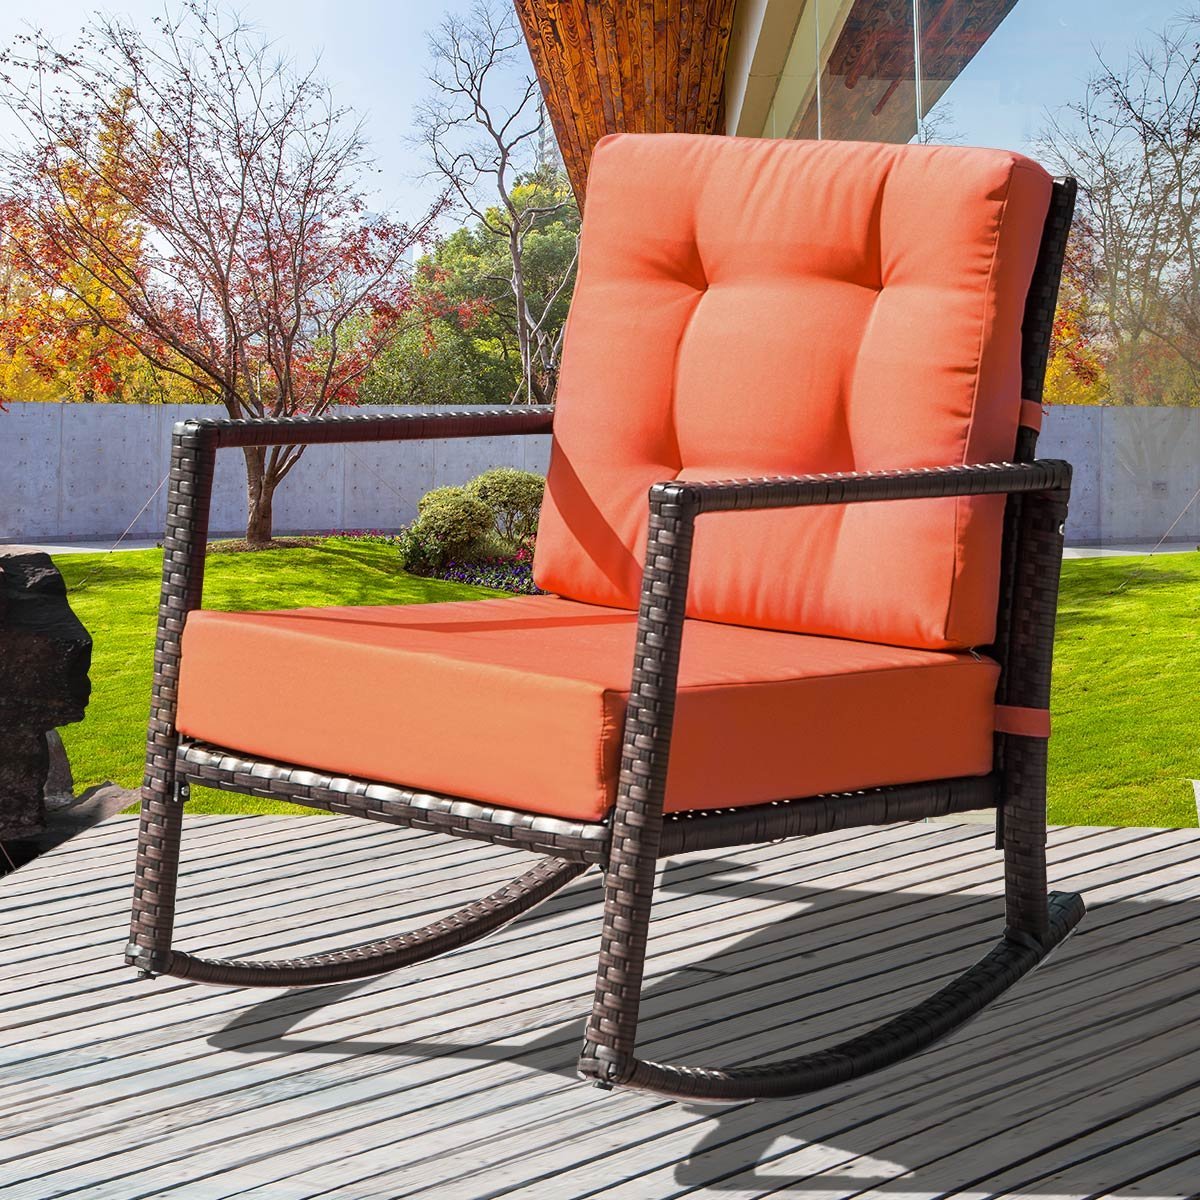 Merax Cushioned Rattan Rocker Chair Patio Glider Lounge Wicker Chair with Cushion(Orange Cushion) - image 1 of 5